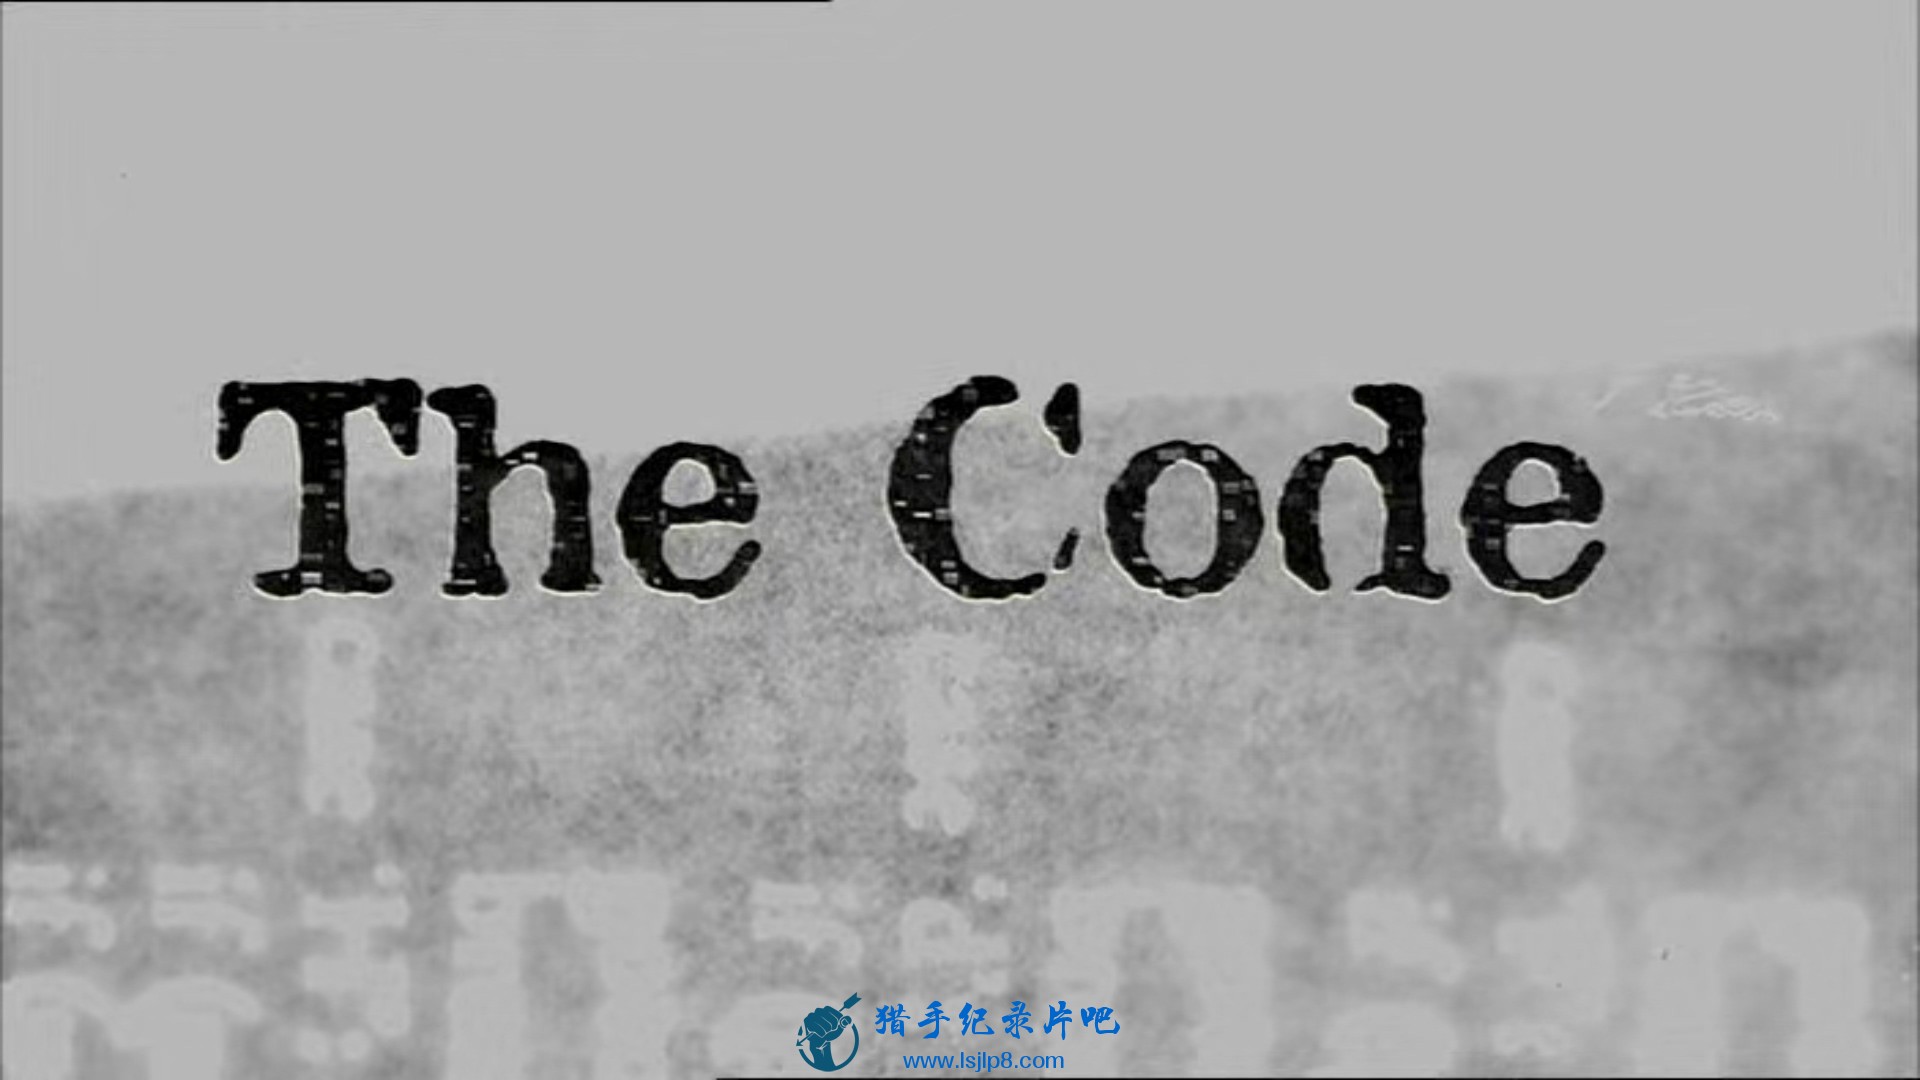 The.Code.Story.of.Linux.2001.DVDRip.50fps.HEVC.AC3-LiNUX.mkv_20210806_105115.056.jpg